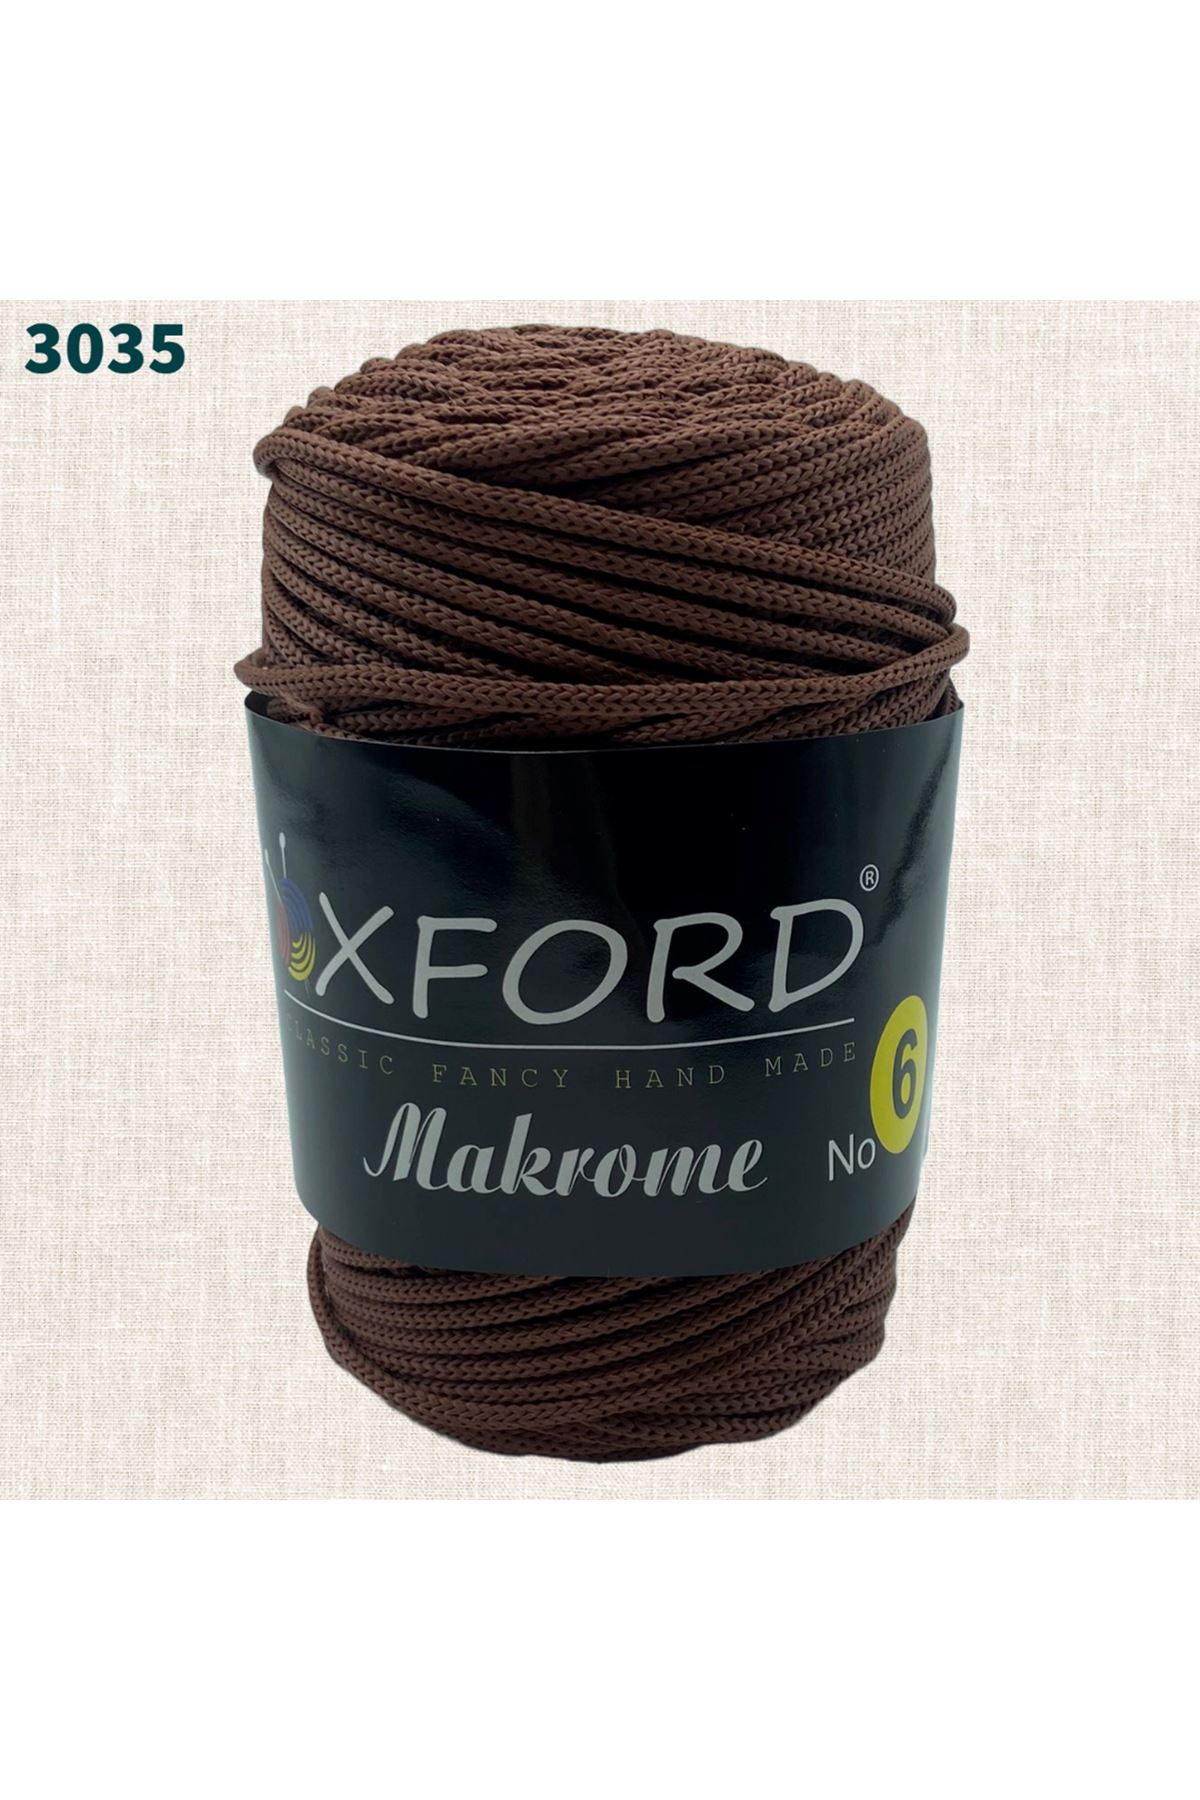 Oxford 6 No Makrome - 3035 Çikolata Kahve